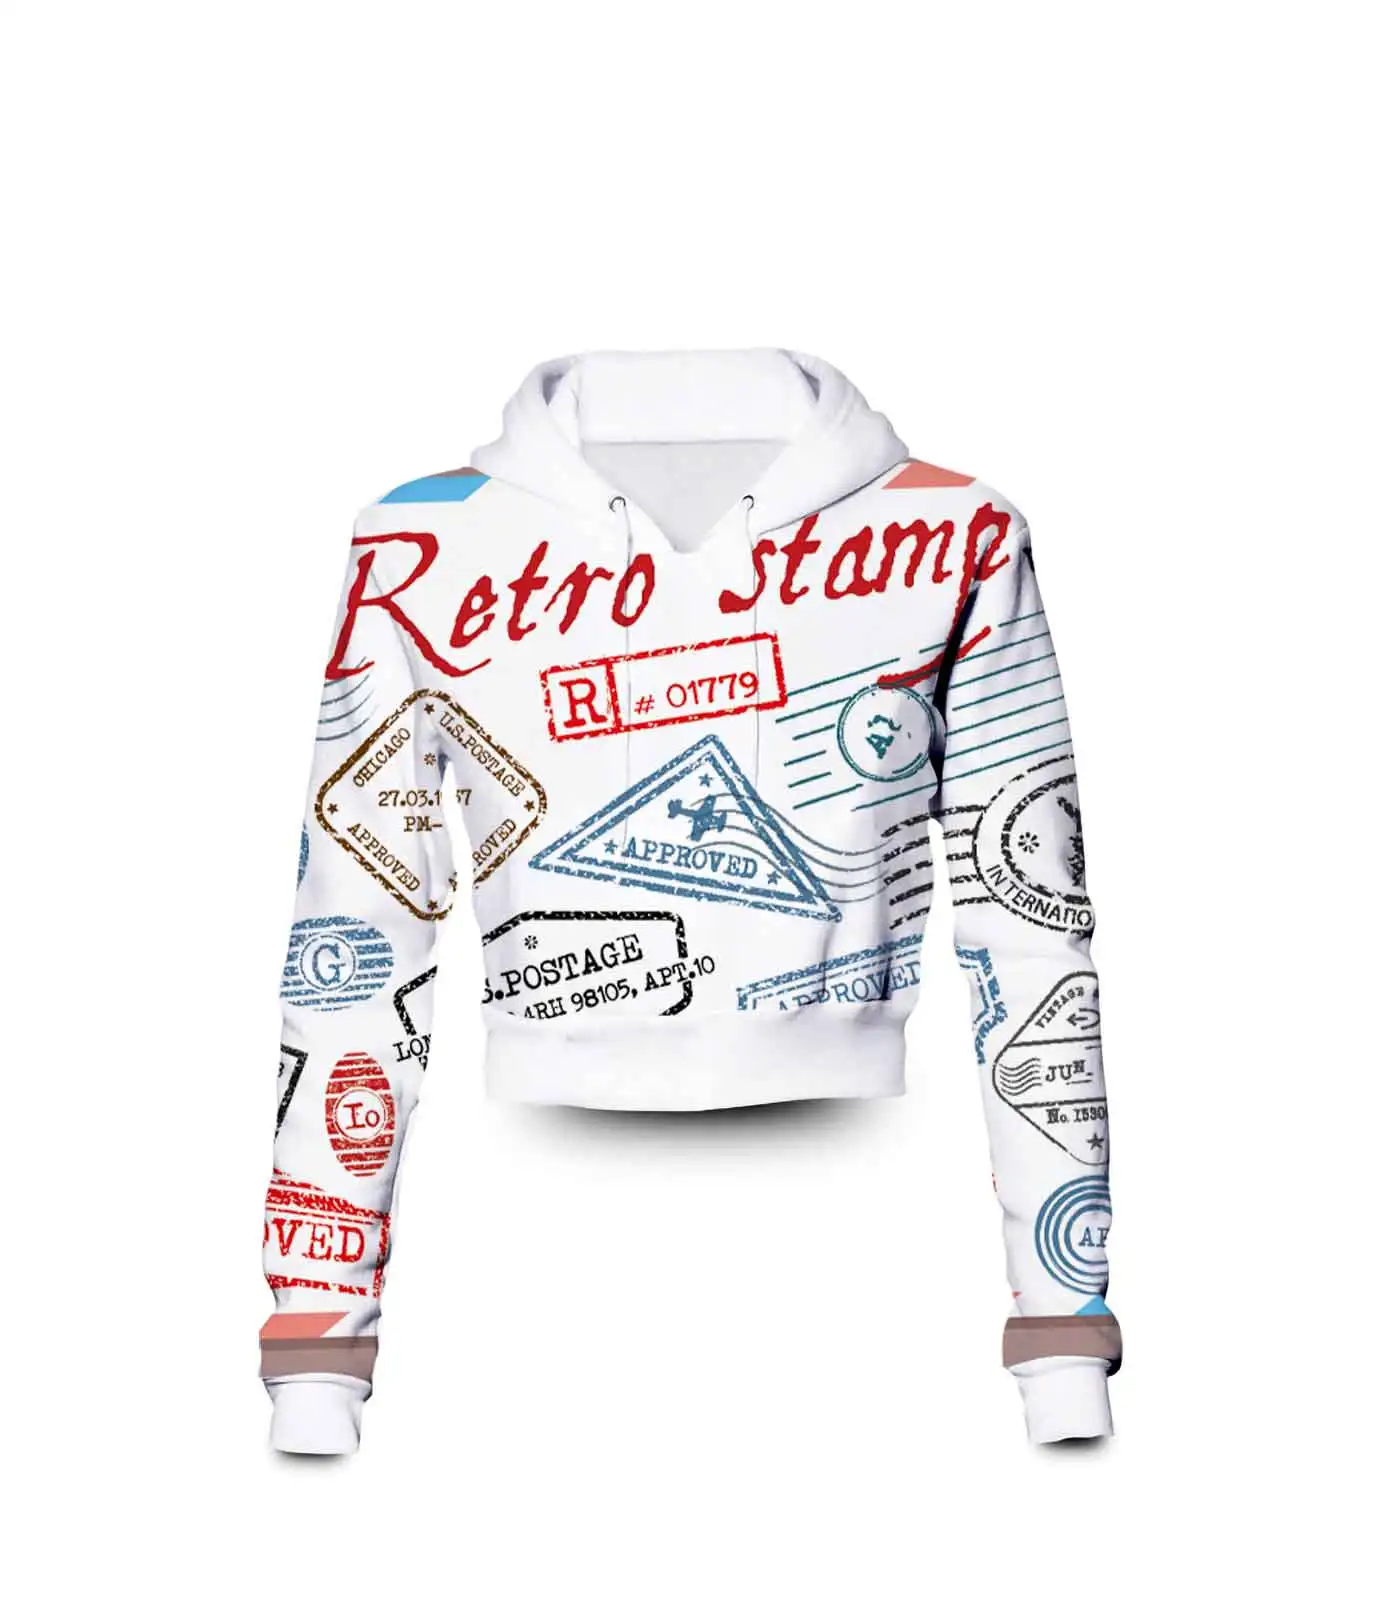 Retro 3 Line Clothing Stamp